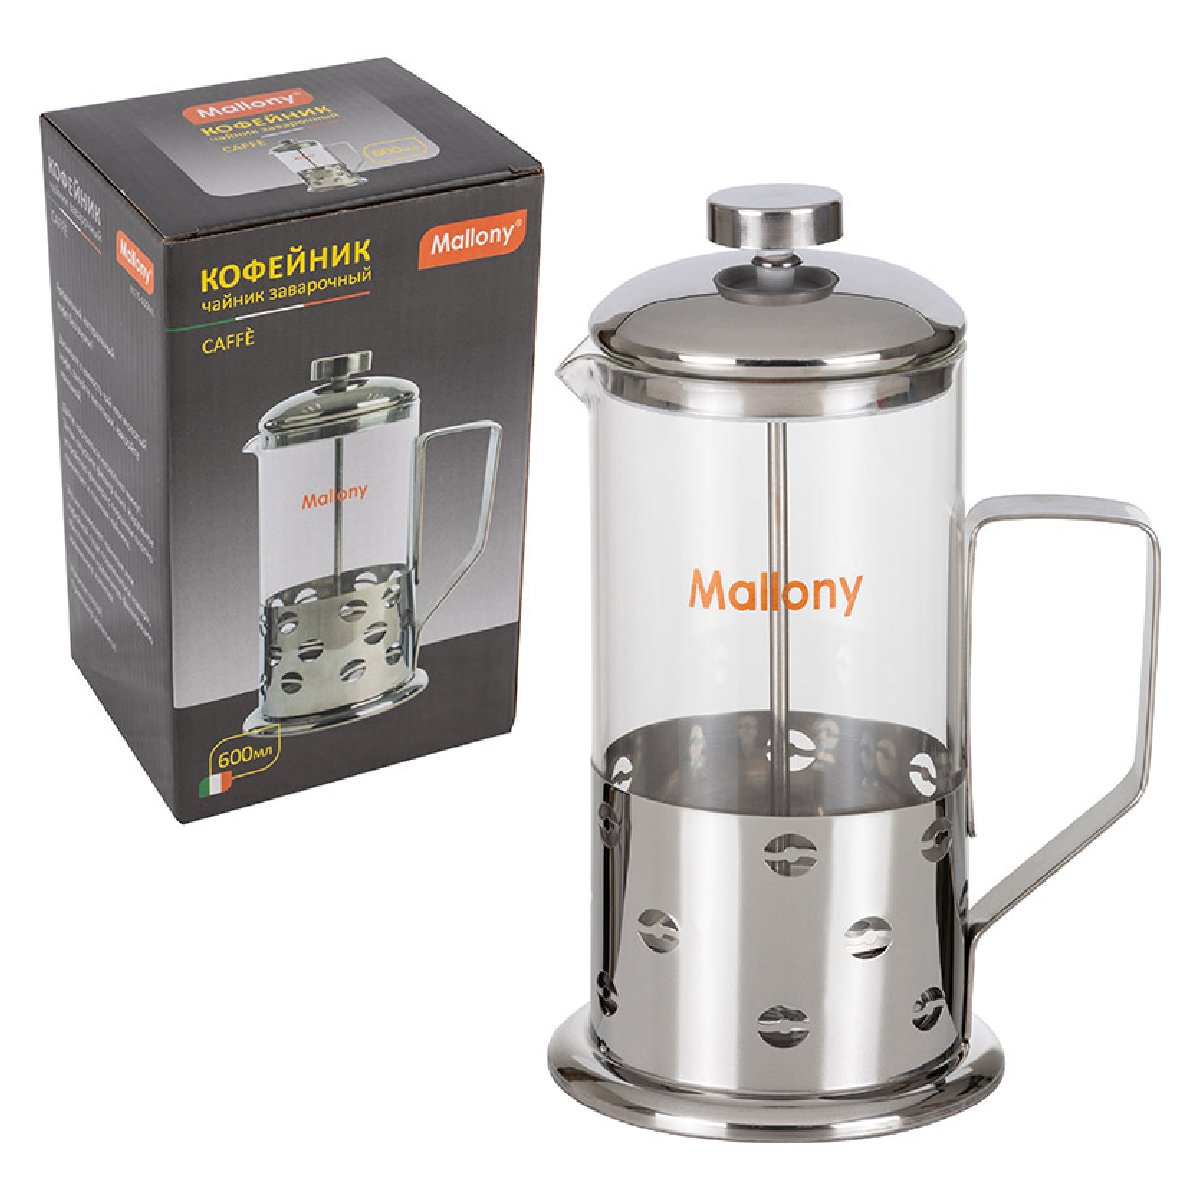 Чайник кофейник (кофе-пресс) Mallony Caffe B535-600ML (950146)Купить